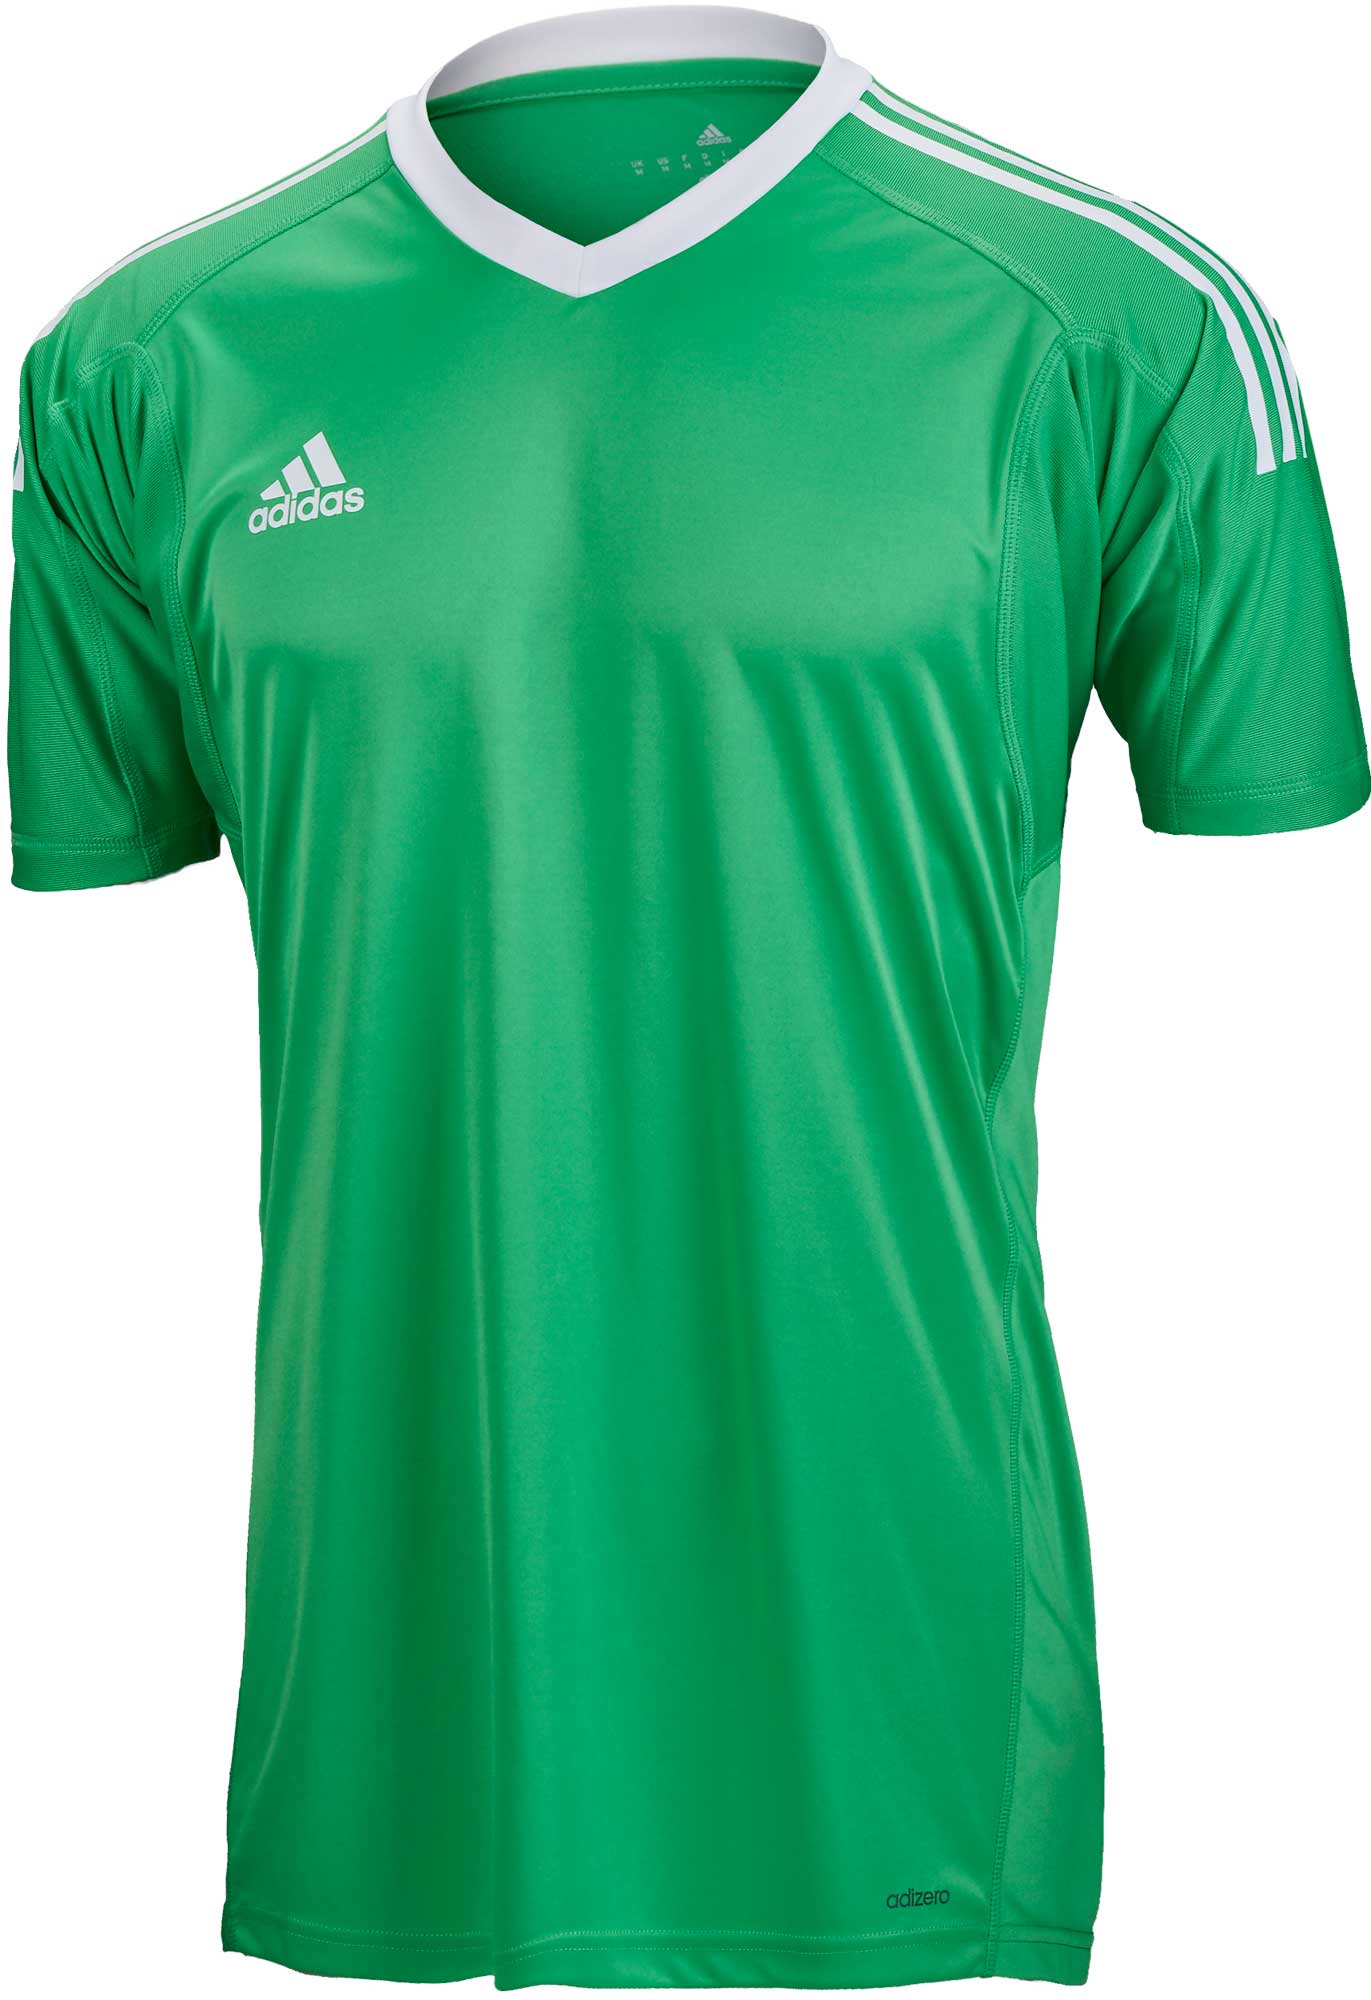 adidas goalkeeper kits 2018